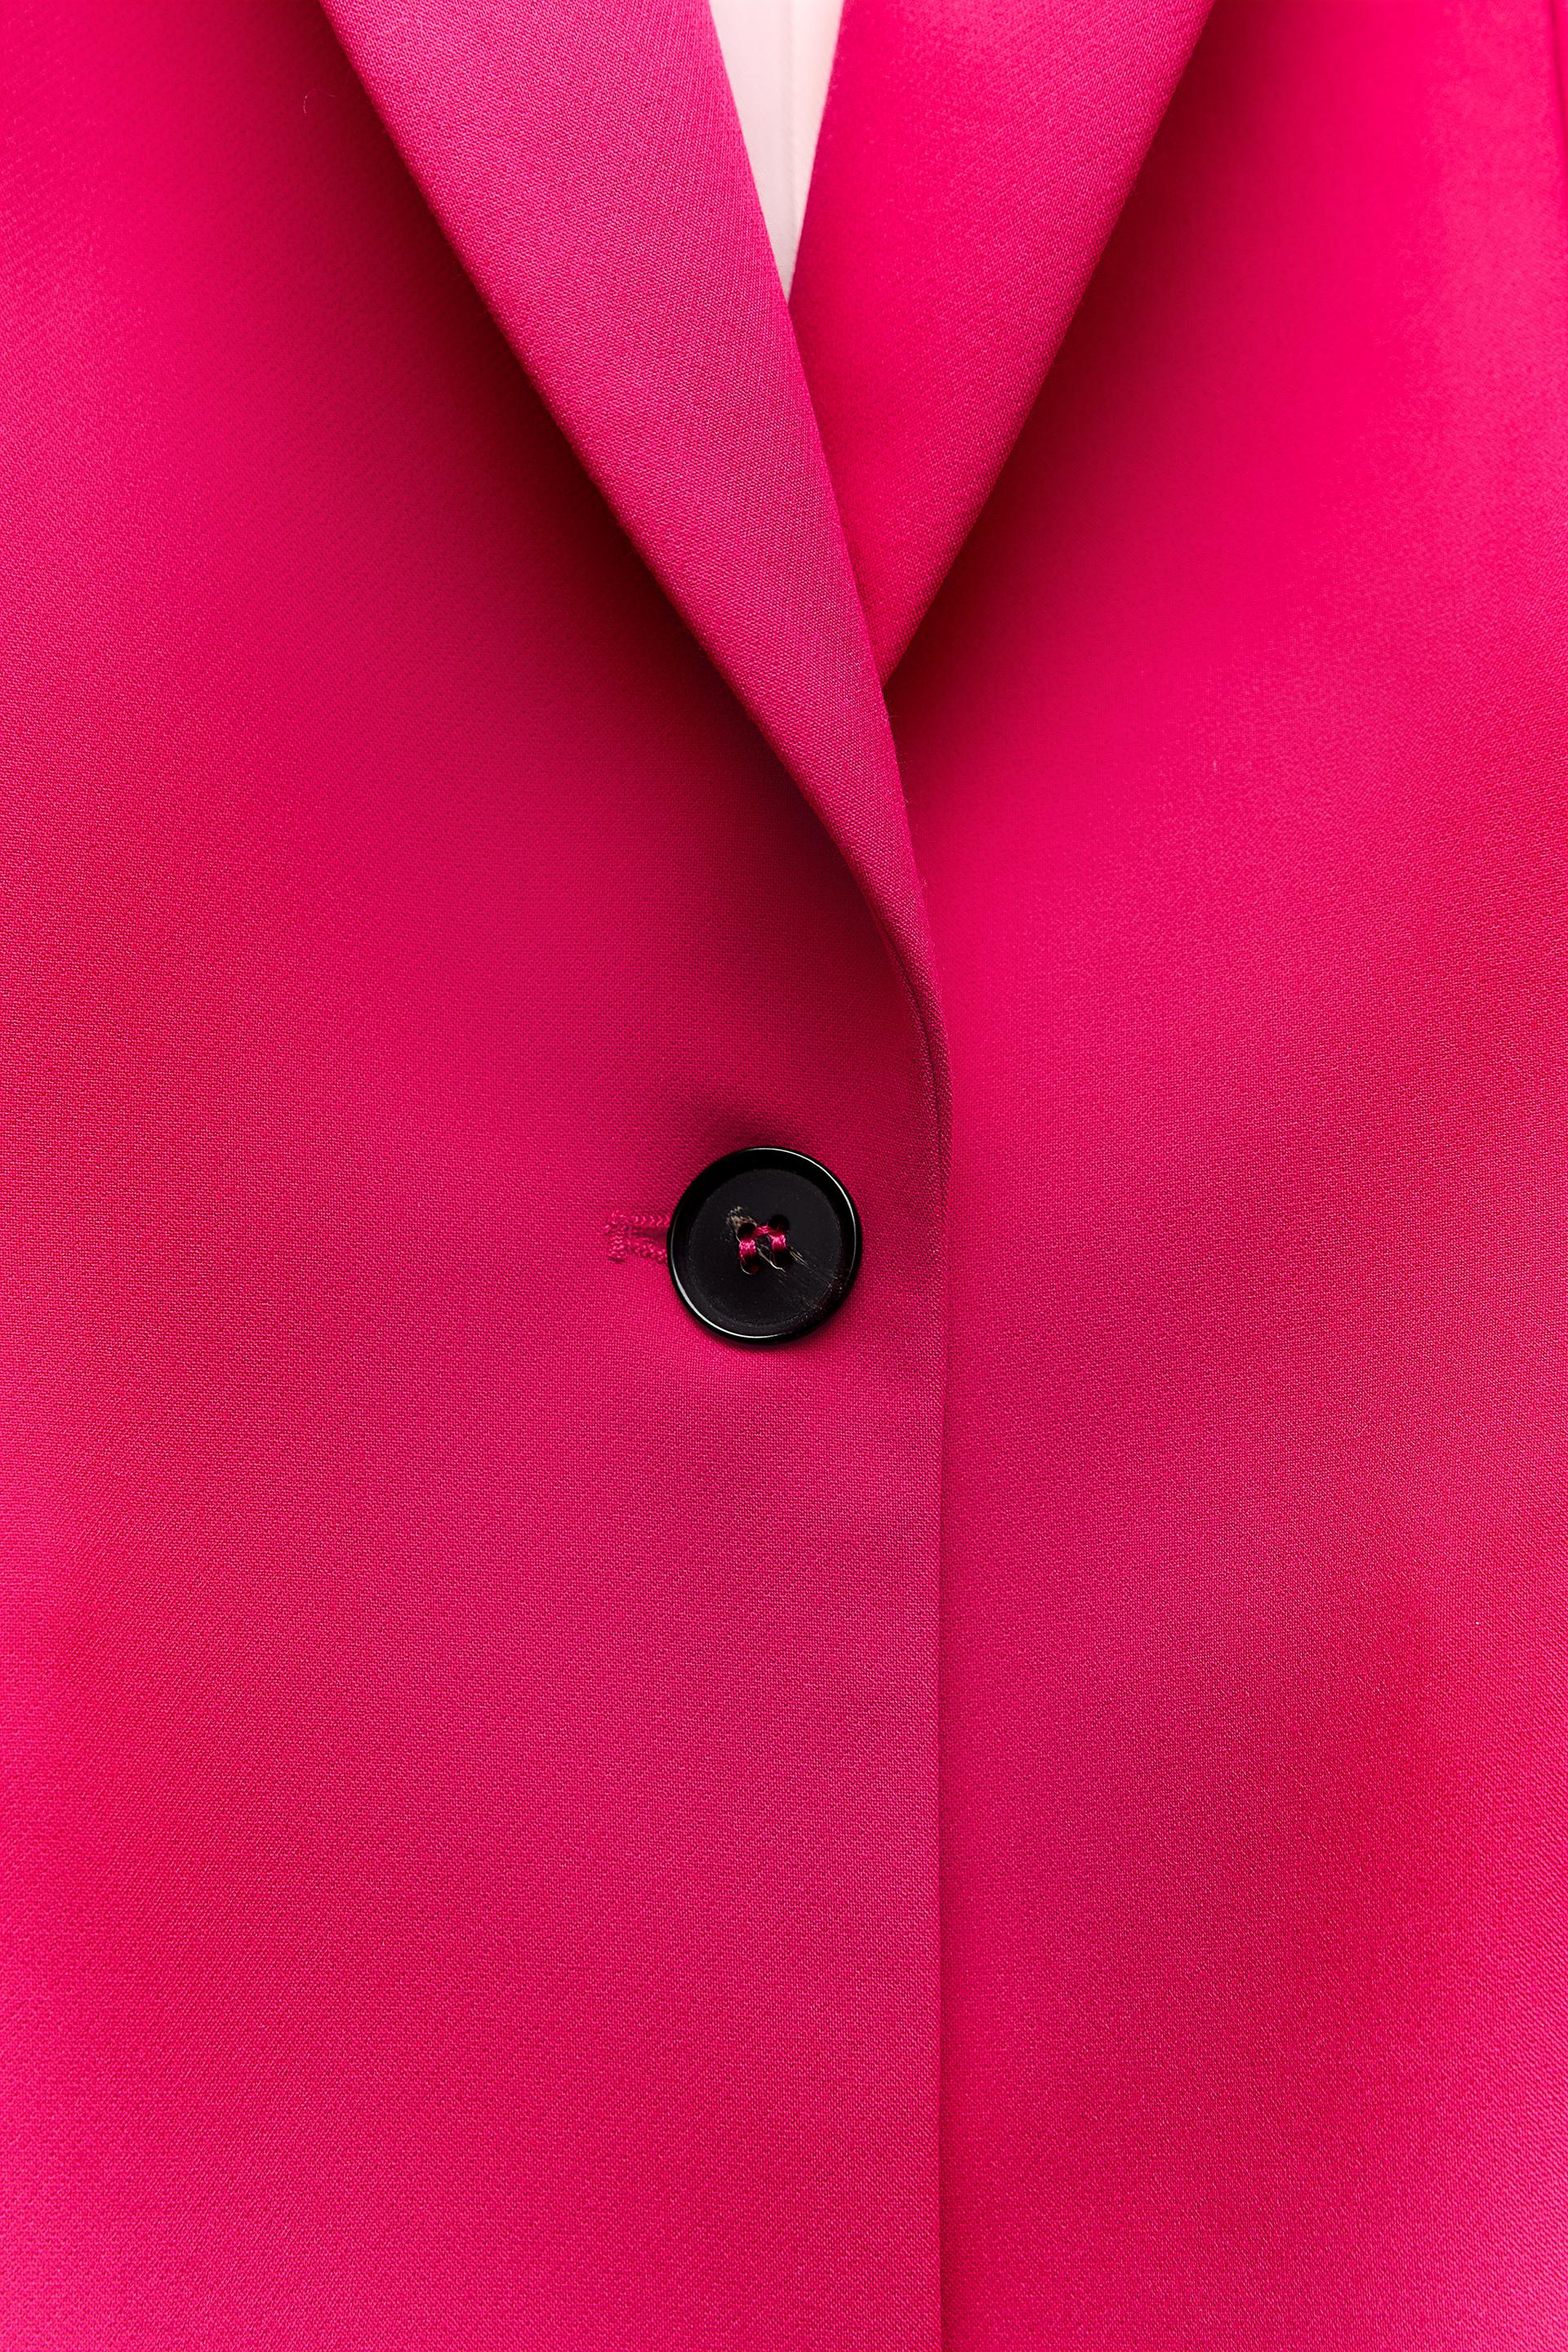 100% Authentic ZARA Fuchsia Pink Blazer with Tuxedo Collar $119+Tax Size:  XS